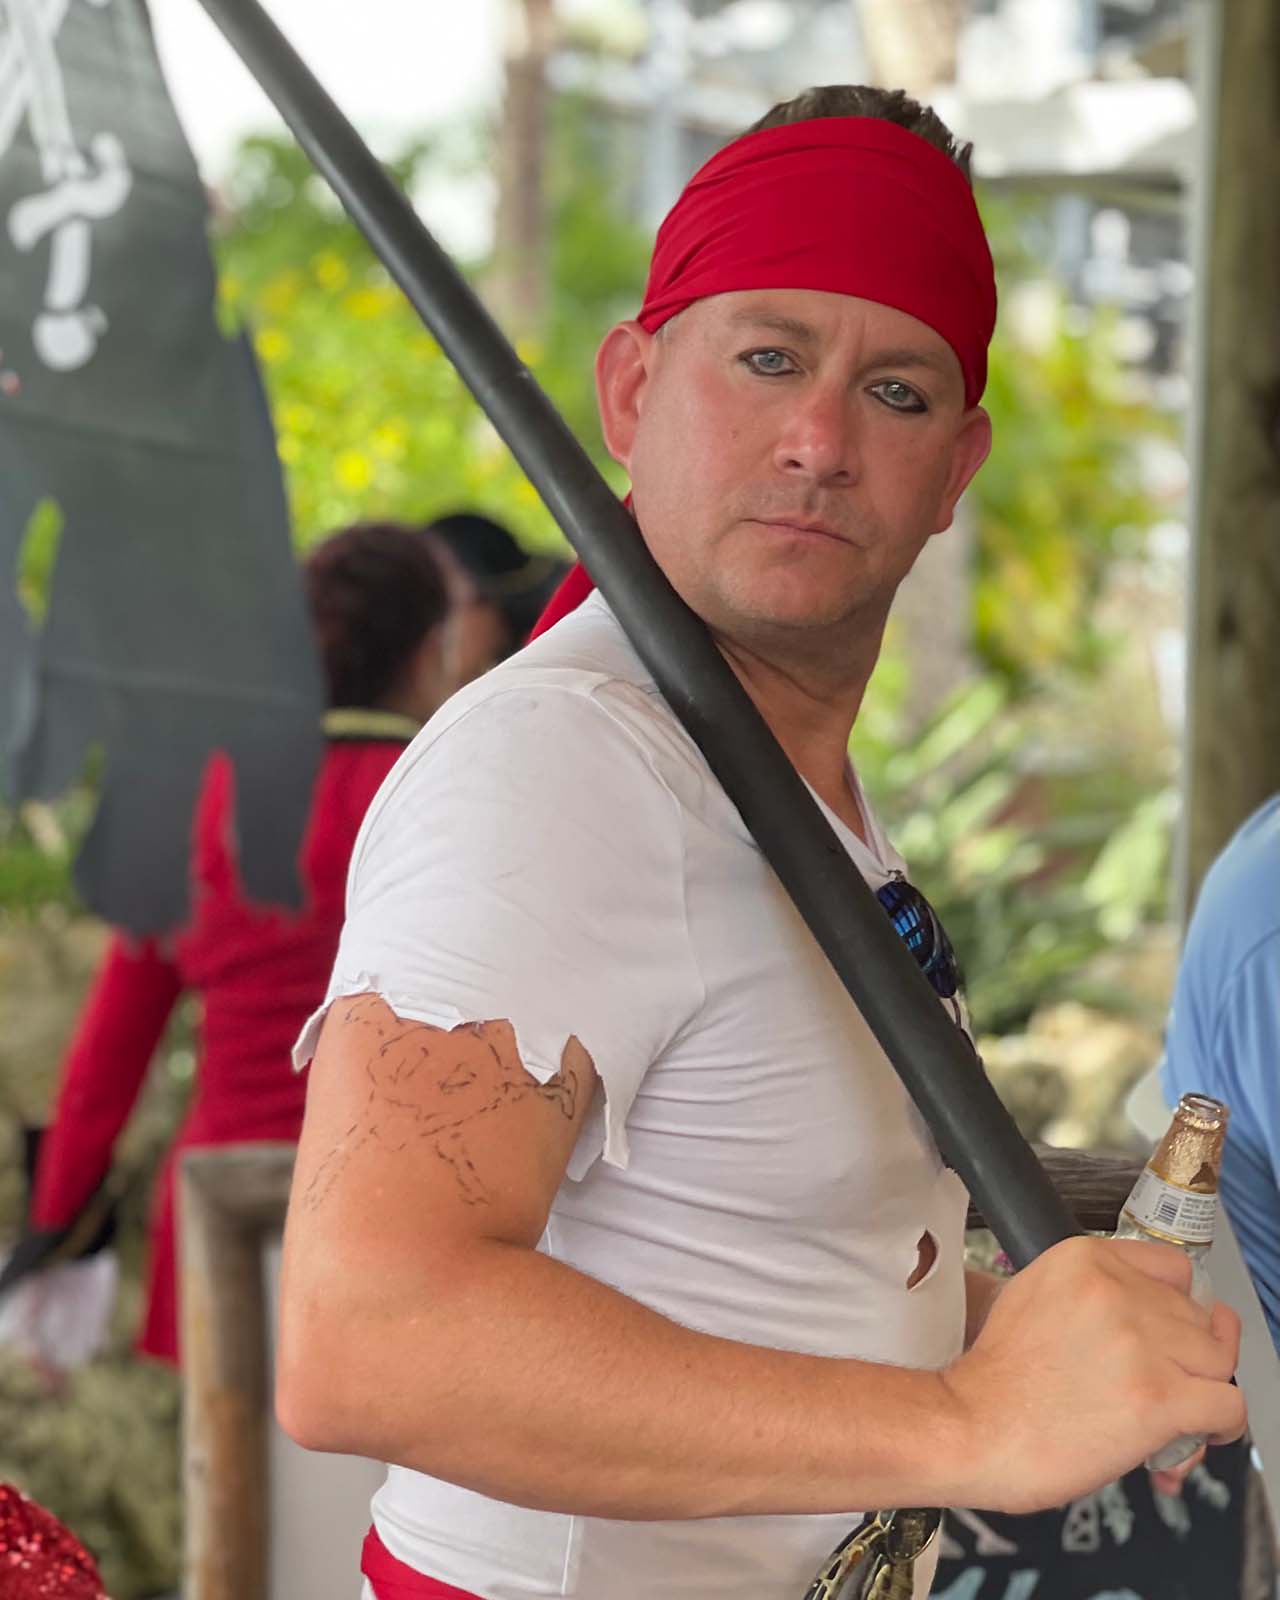 Man wearing pirate costume